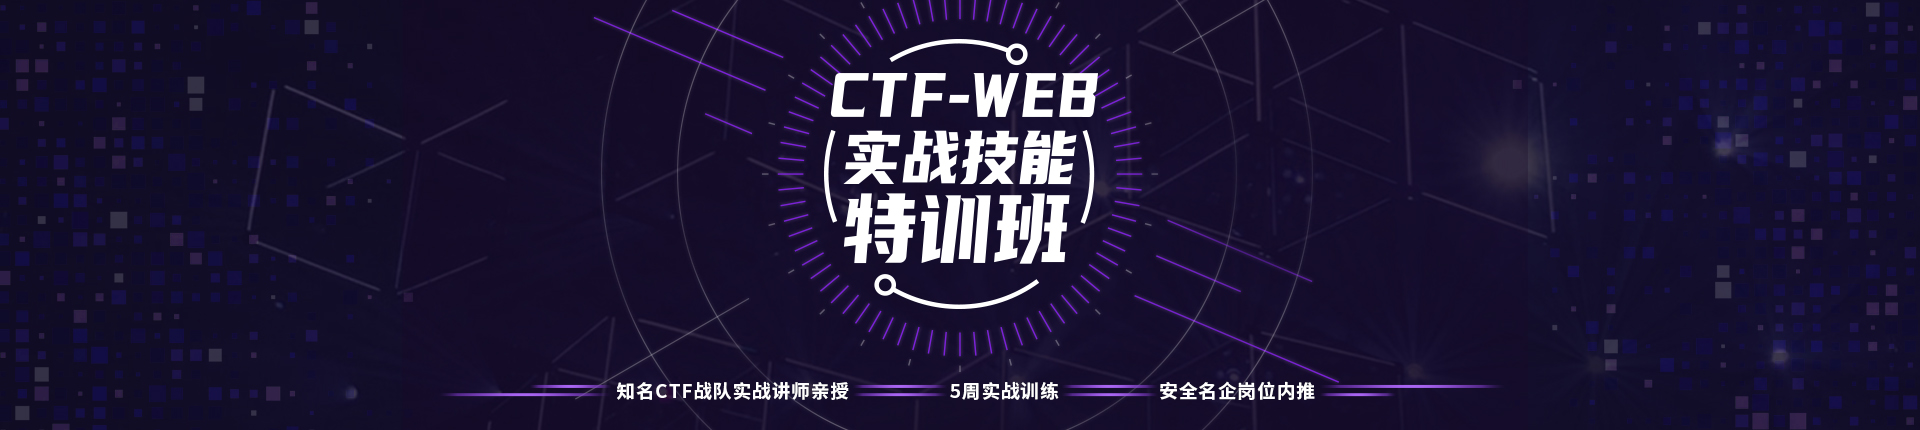 ctf-web